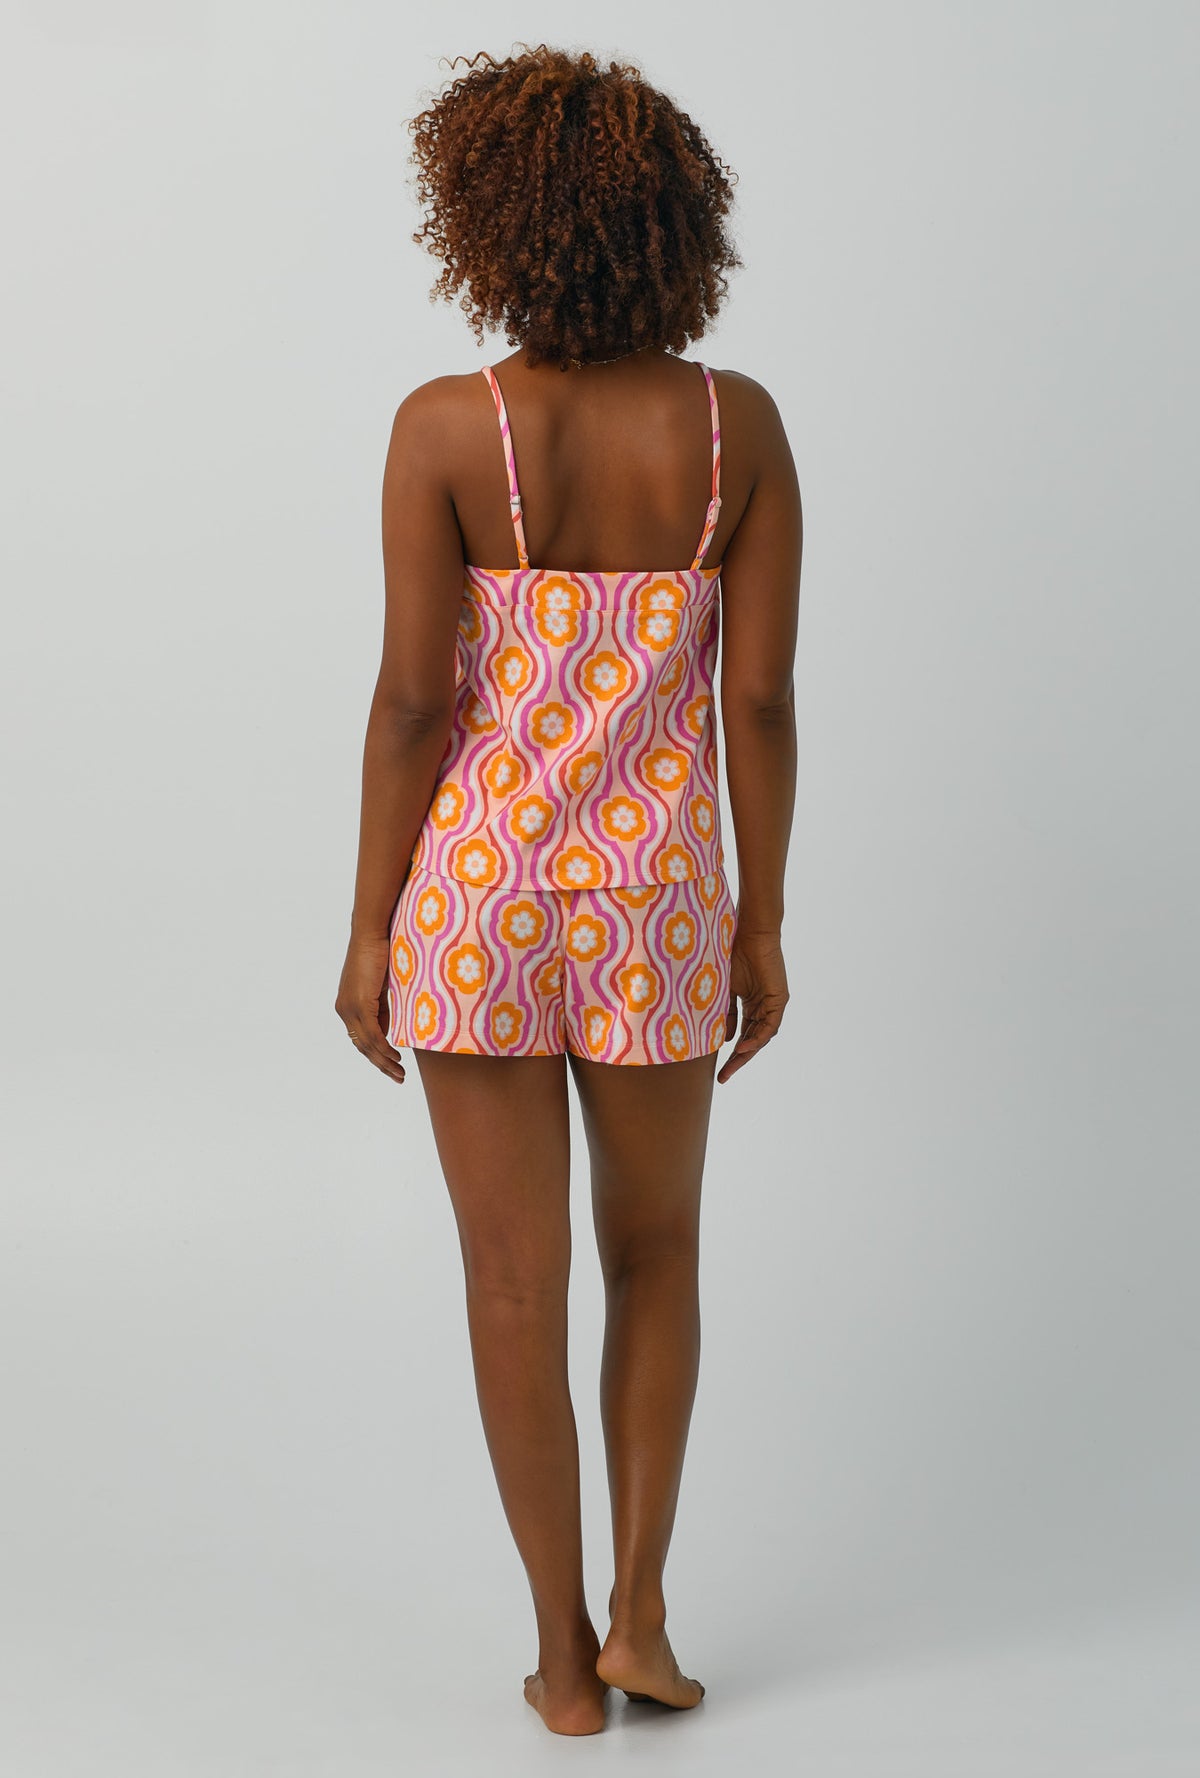 A lady wearing Cami Stretch Jersey Shorty PJ Set with flower swirl print